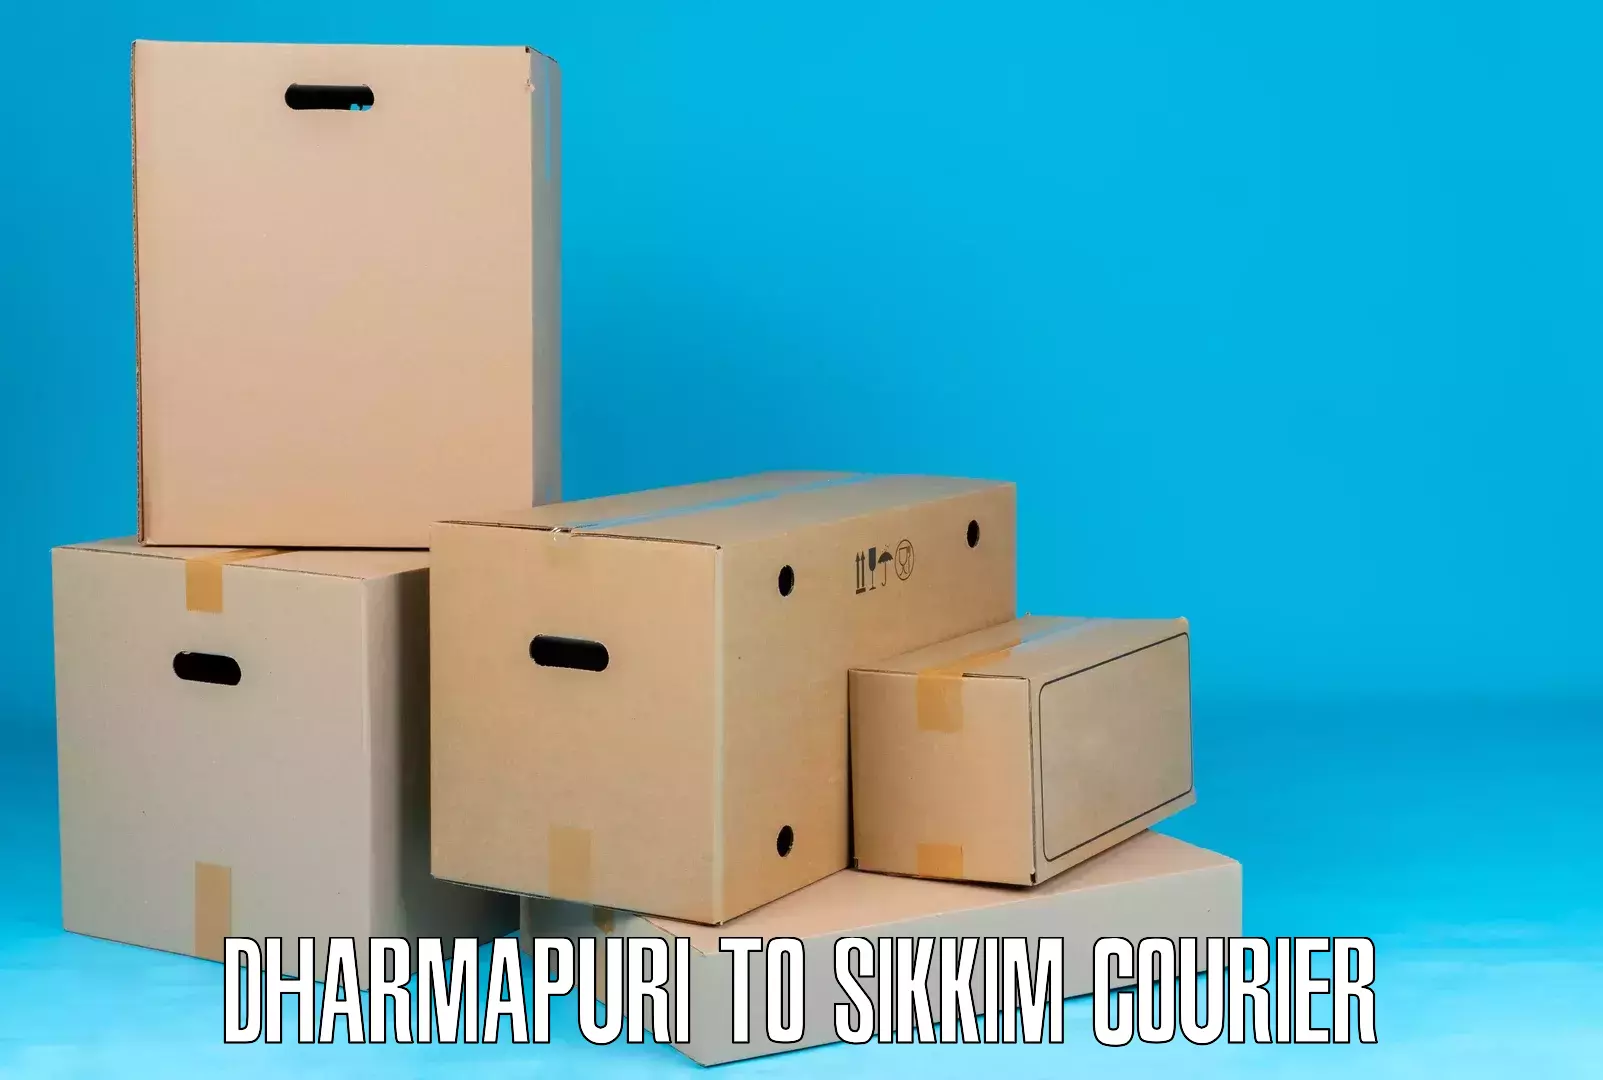 Supply chain efficiency Dharmapuri to Rangpo